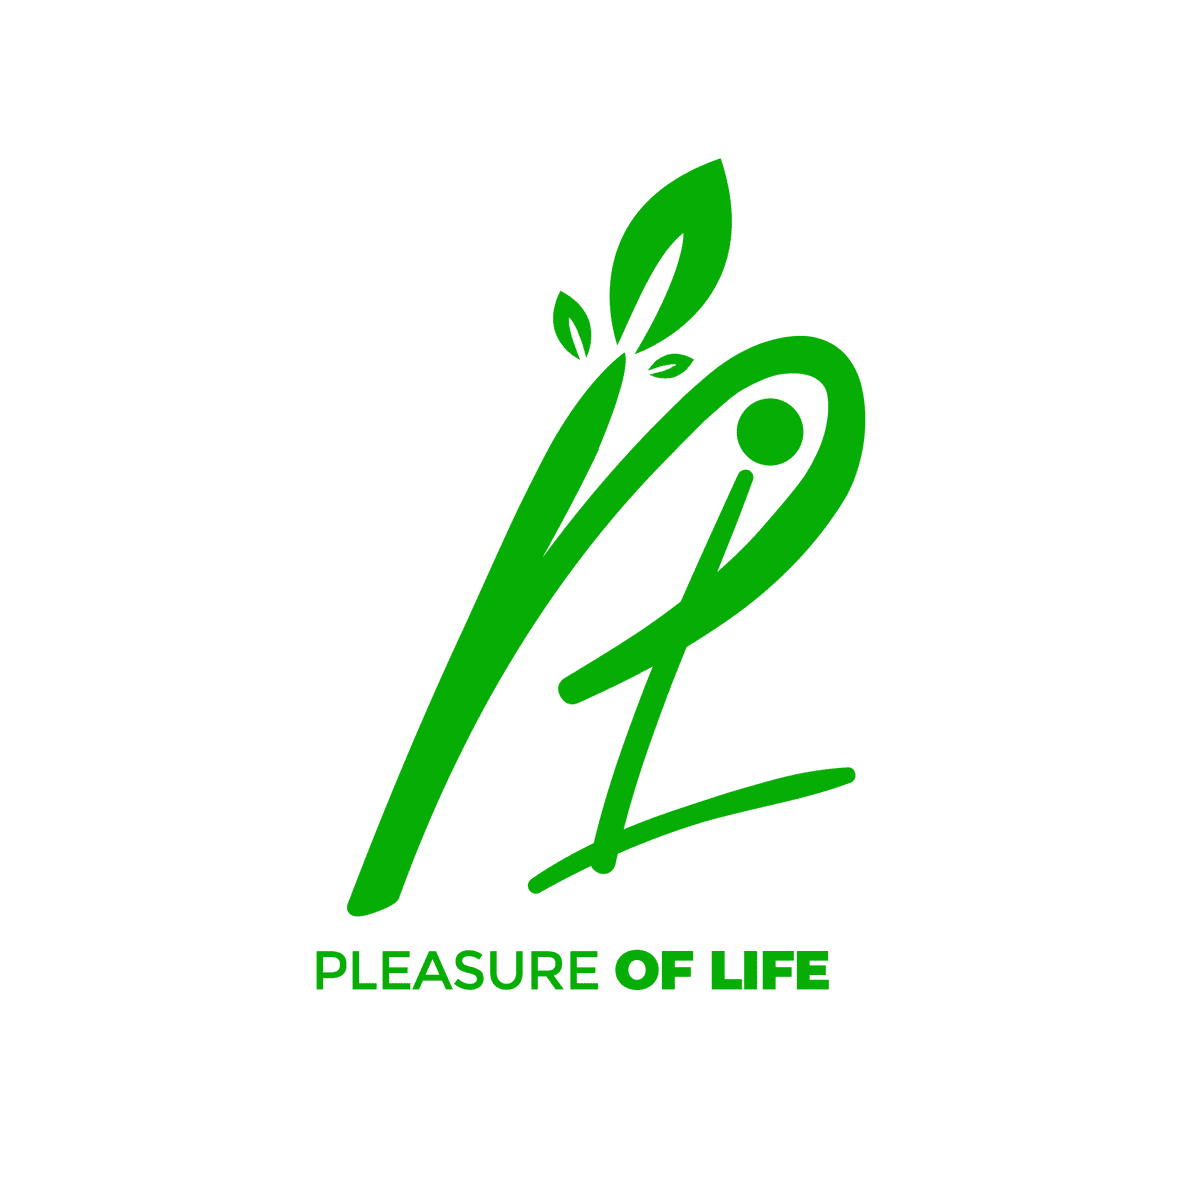 Pleasure_of_life_logo_green